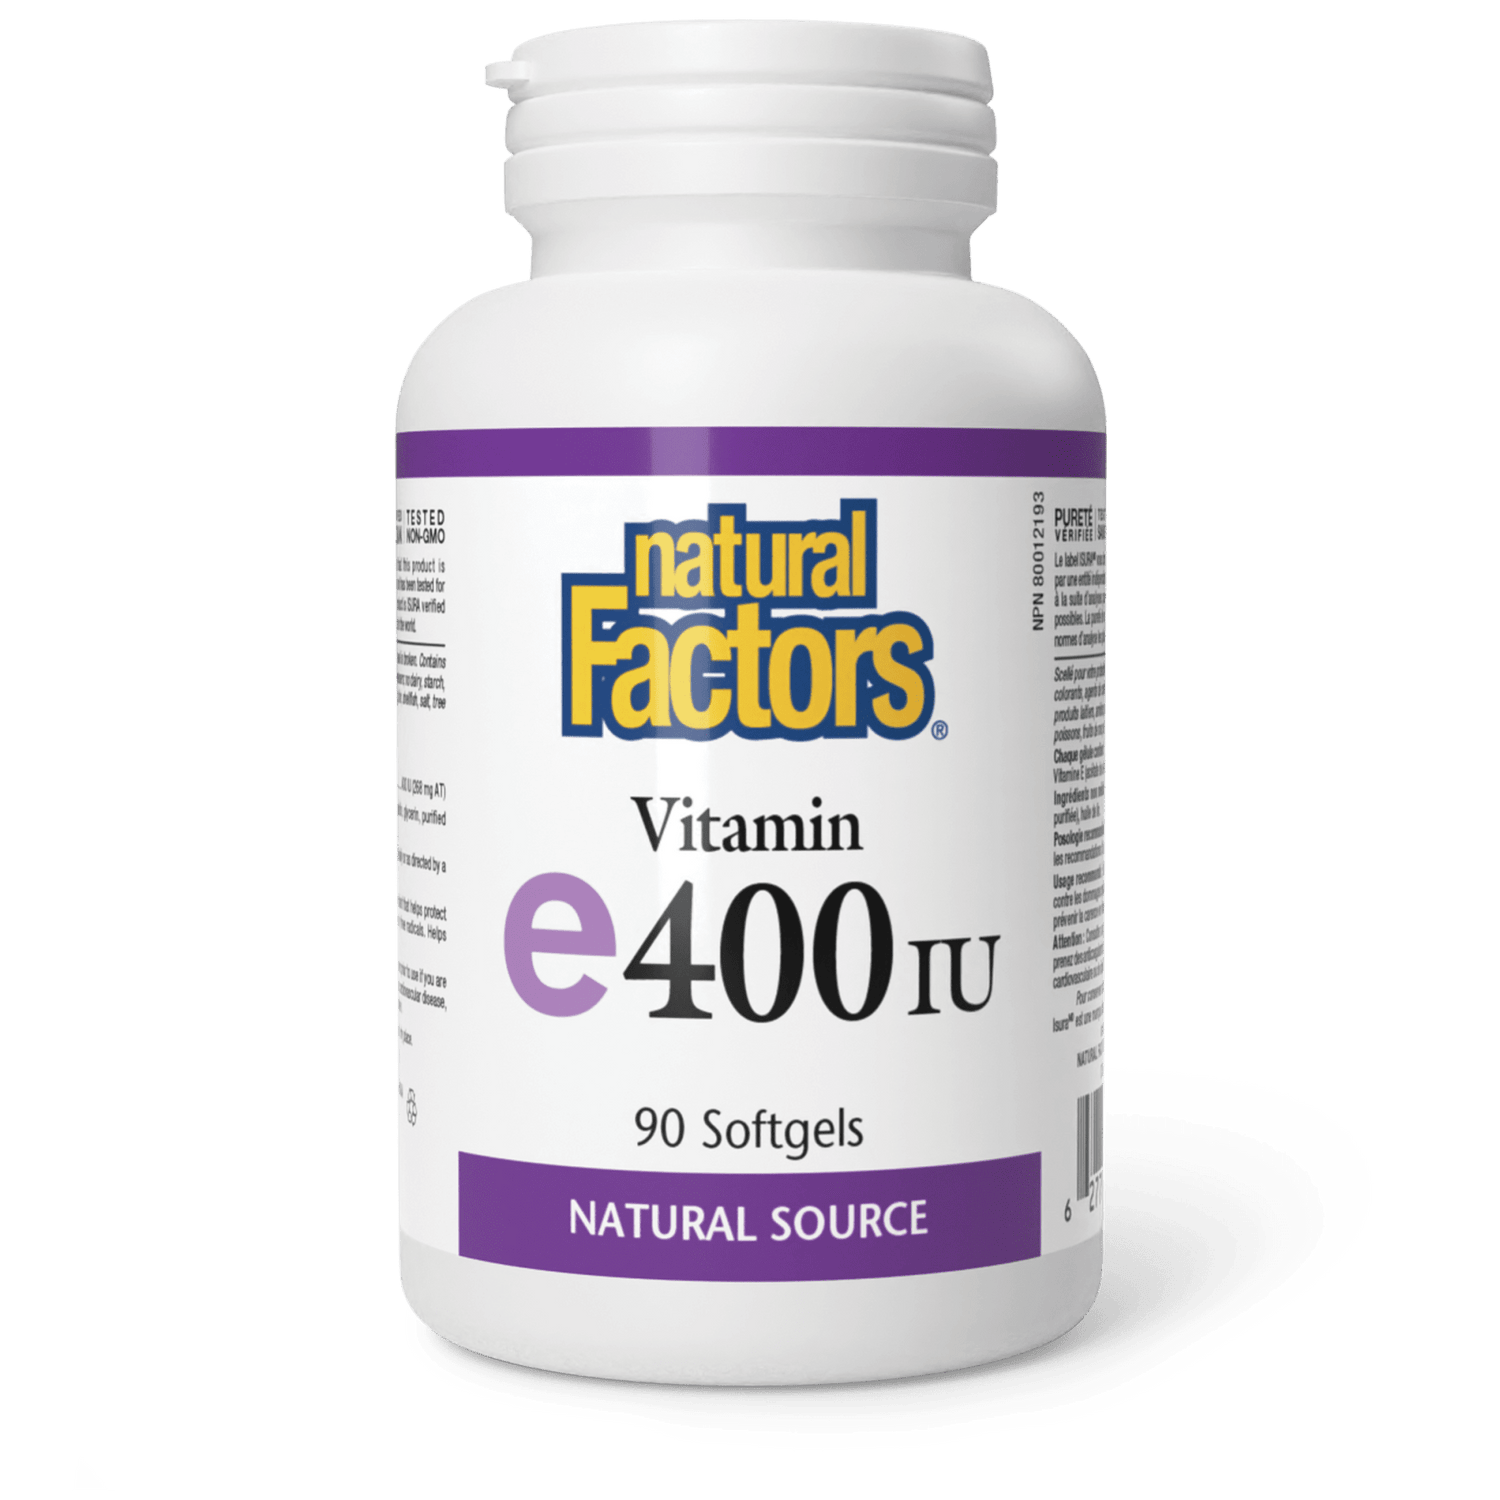 Vitamin E 400 IU, Natural Source, Natural Factors|v|image|1431